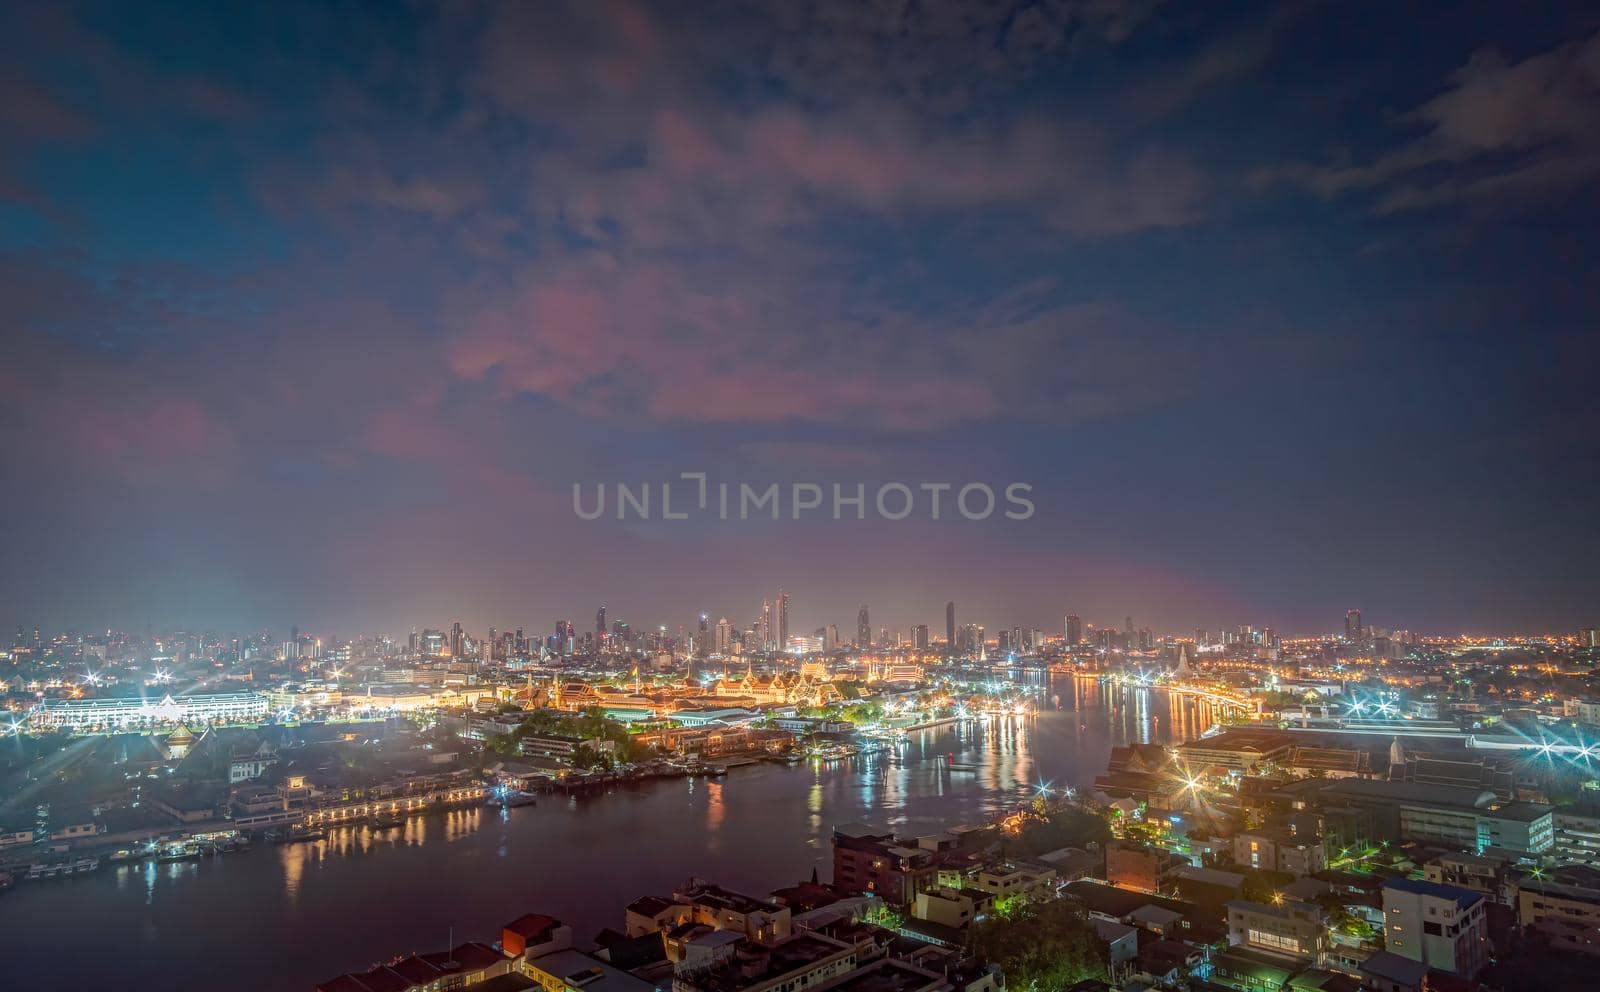 Grand Palace Capital city of Thailand With the Chao Phraya River Surrounding Rattanakosin Island